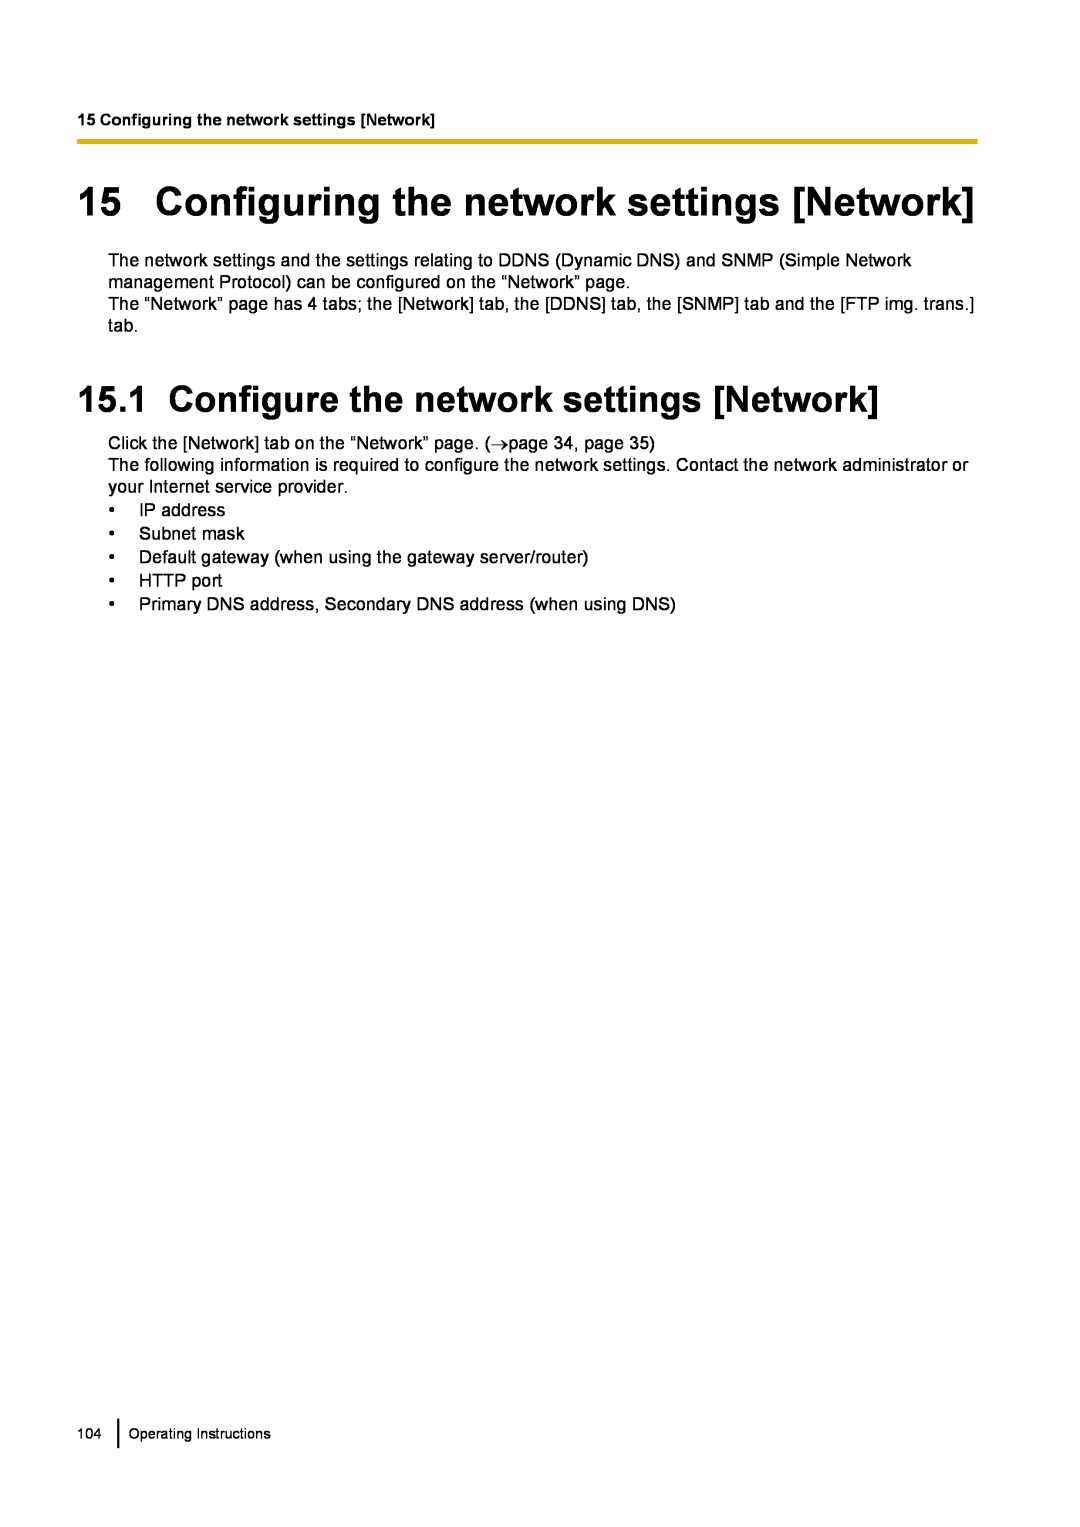 Panasonic BL-VT164W, BL-VP104W manual Configuring the network settings Network, Configure the network settings Network 